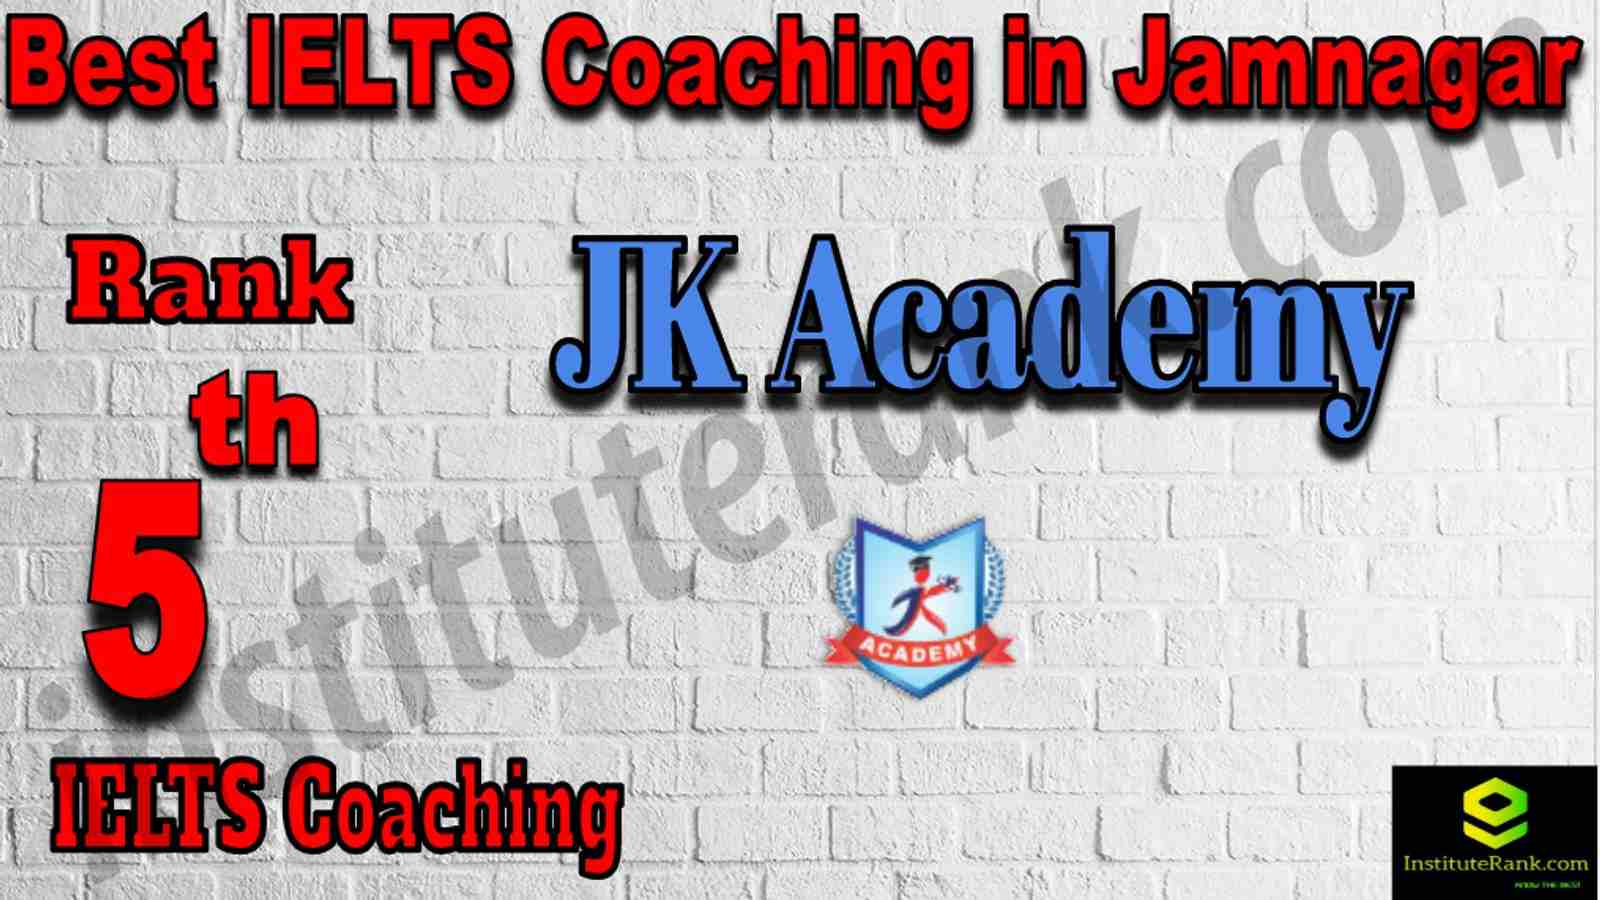 5th Best IELTS Coaching in Jamnagar